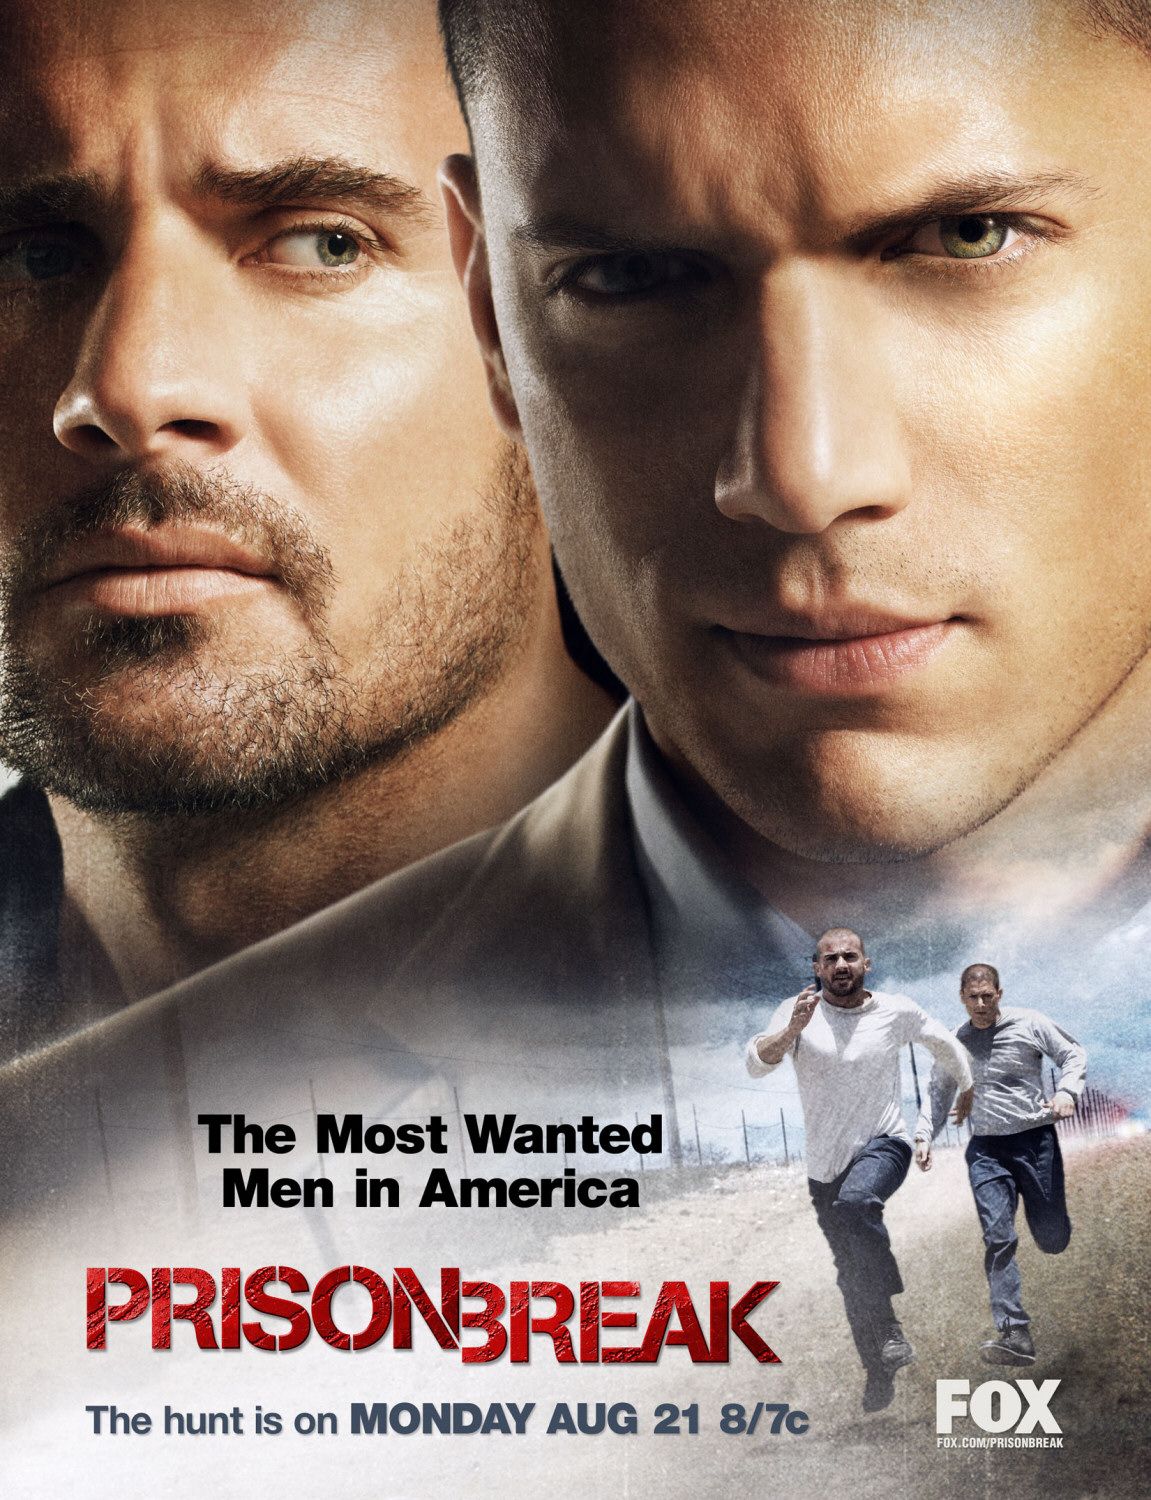 prison break season 1 episode 2 watch online with english subtitles